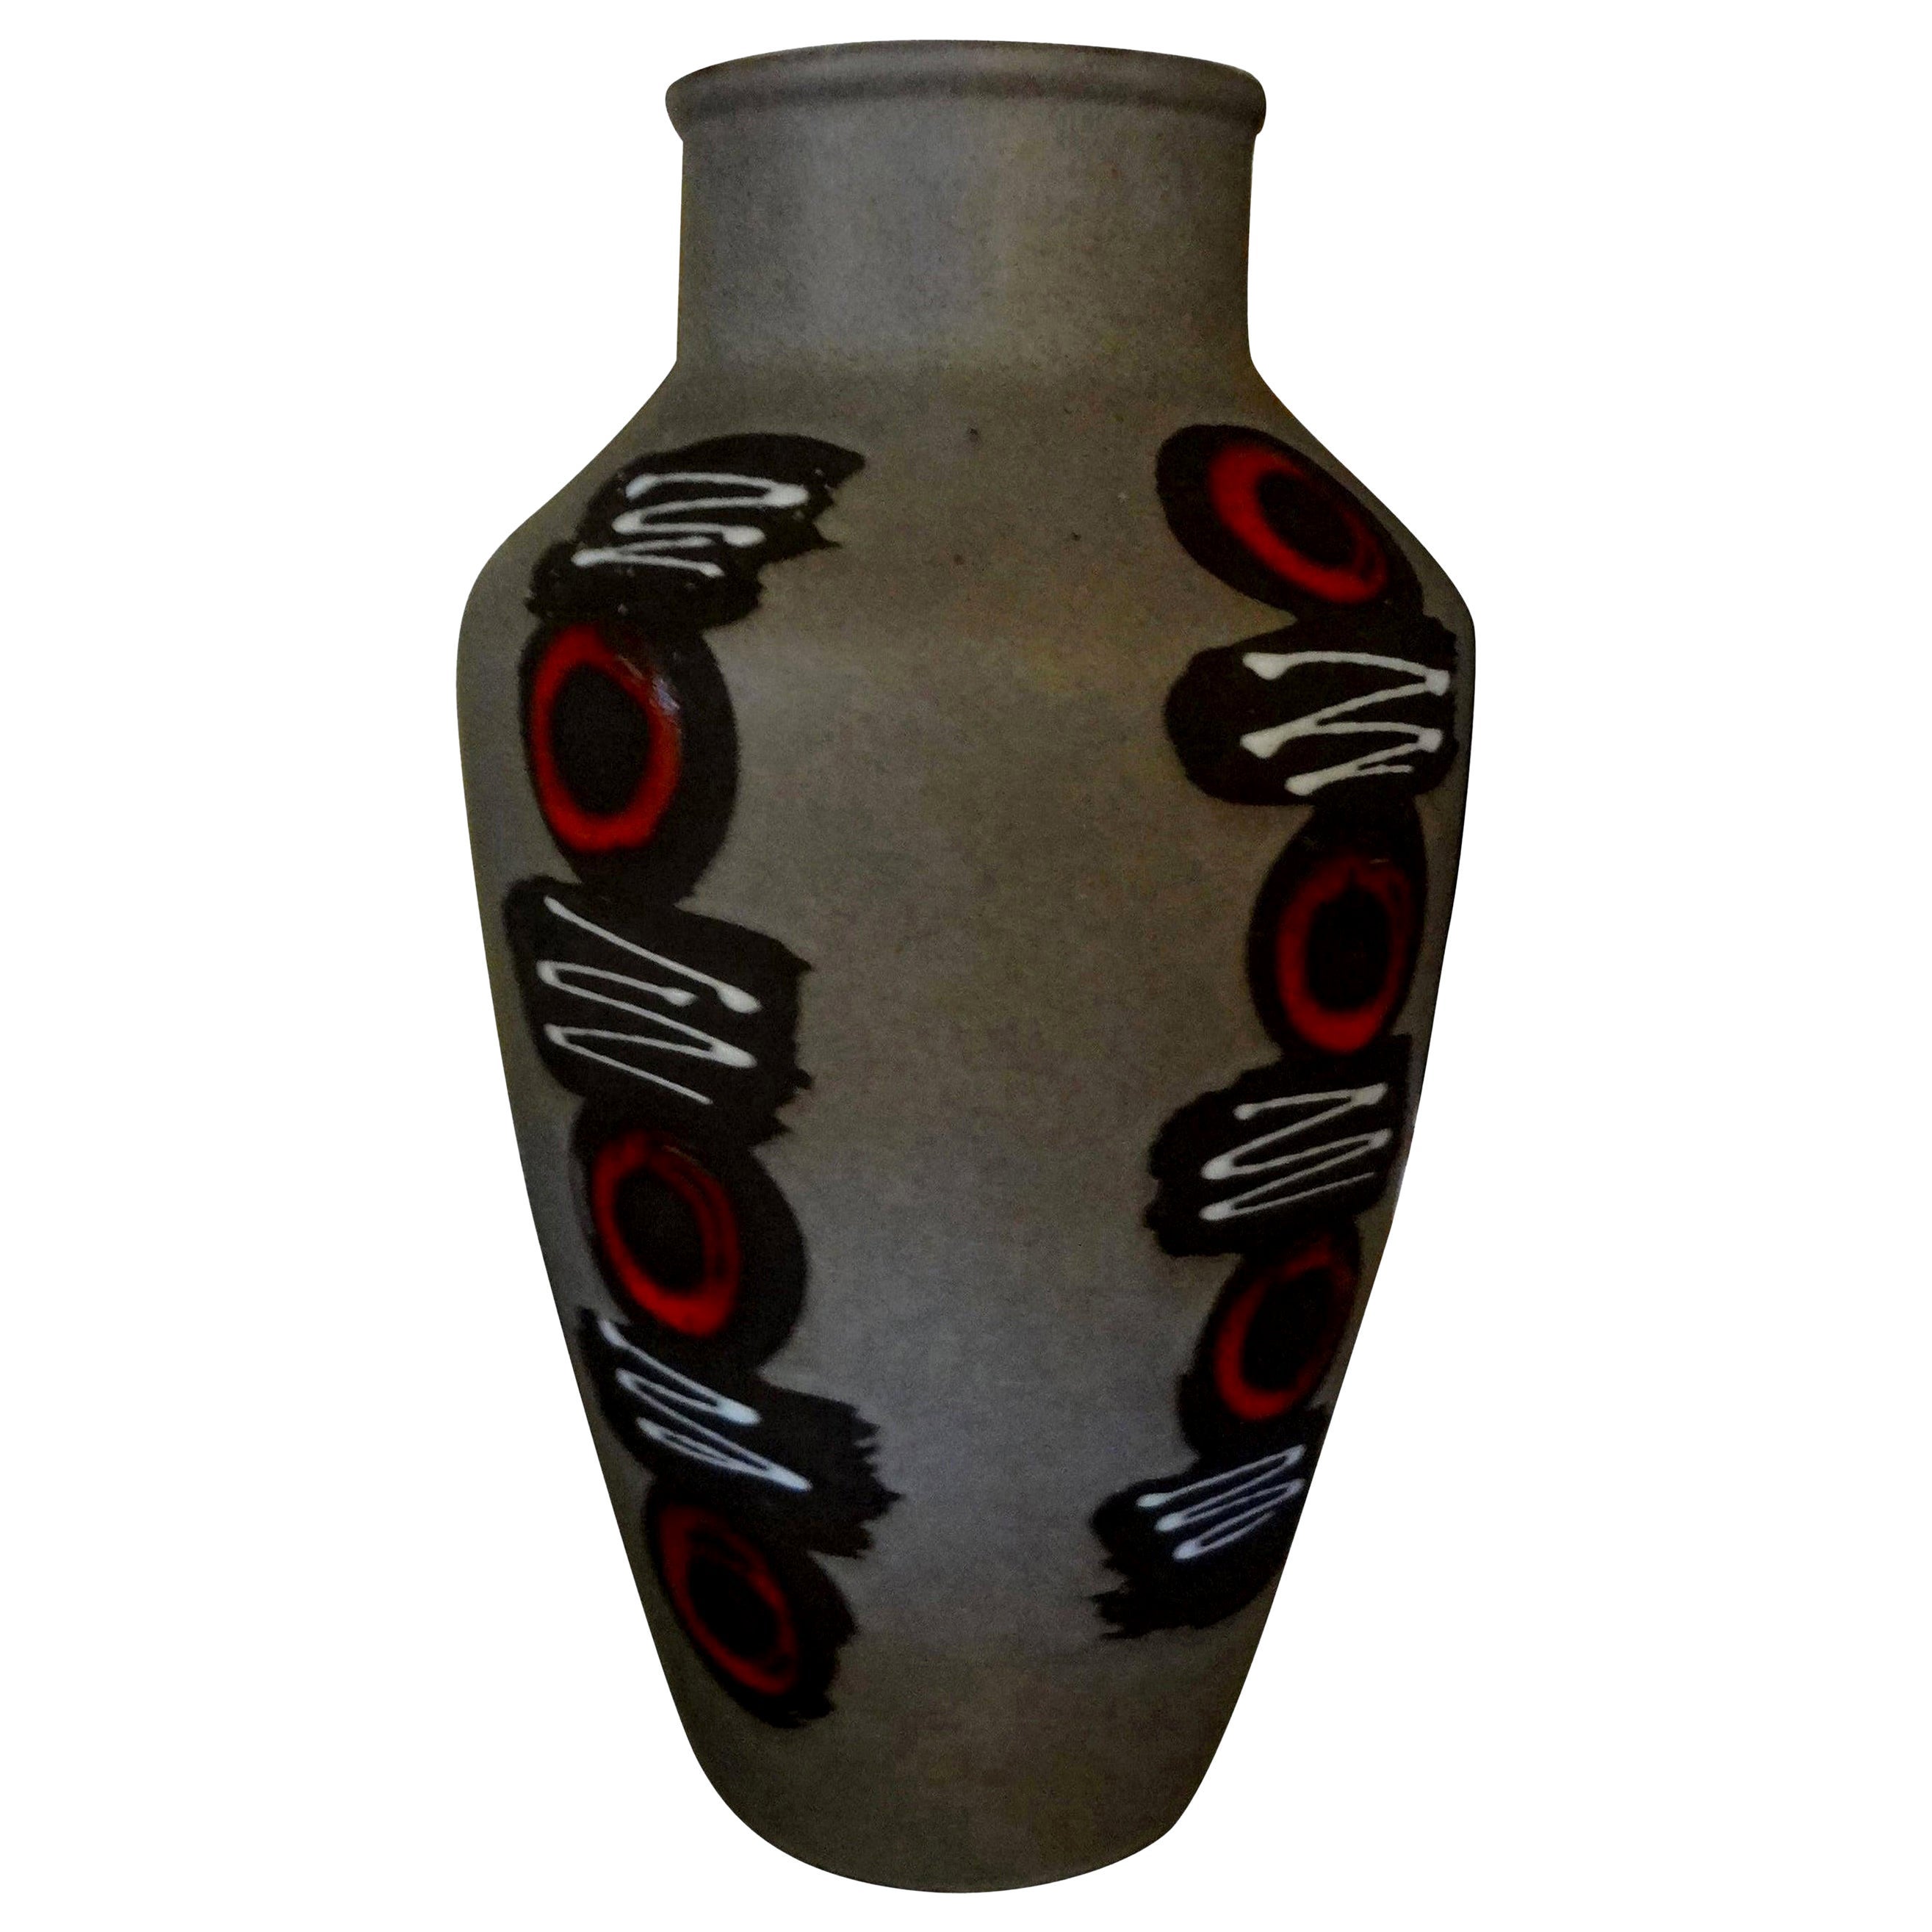 West German Glazed Pottery Vase